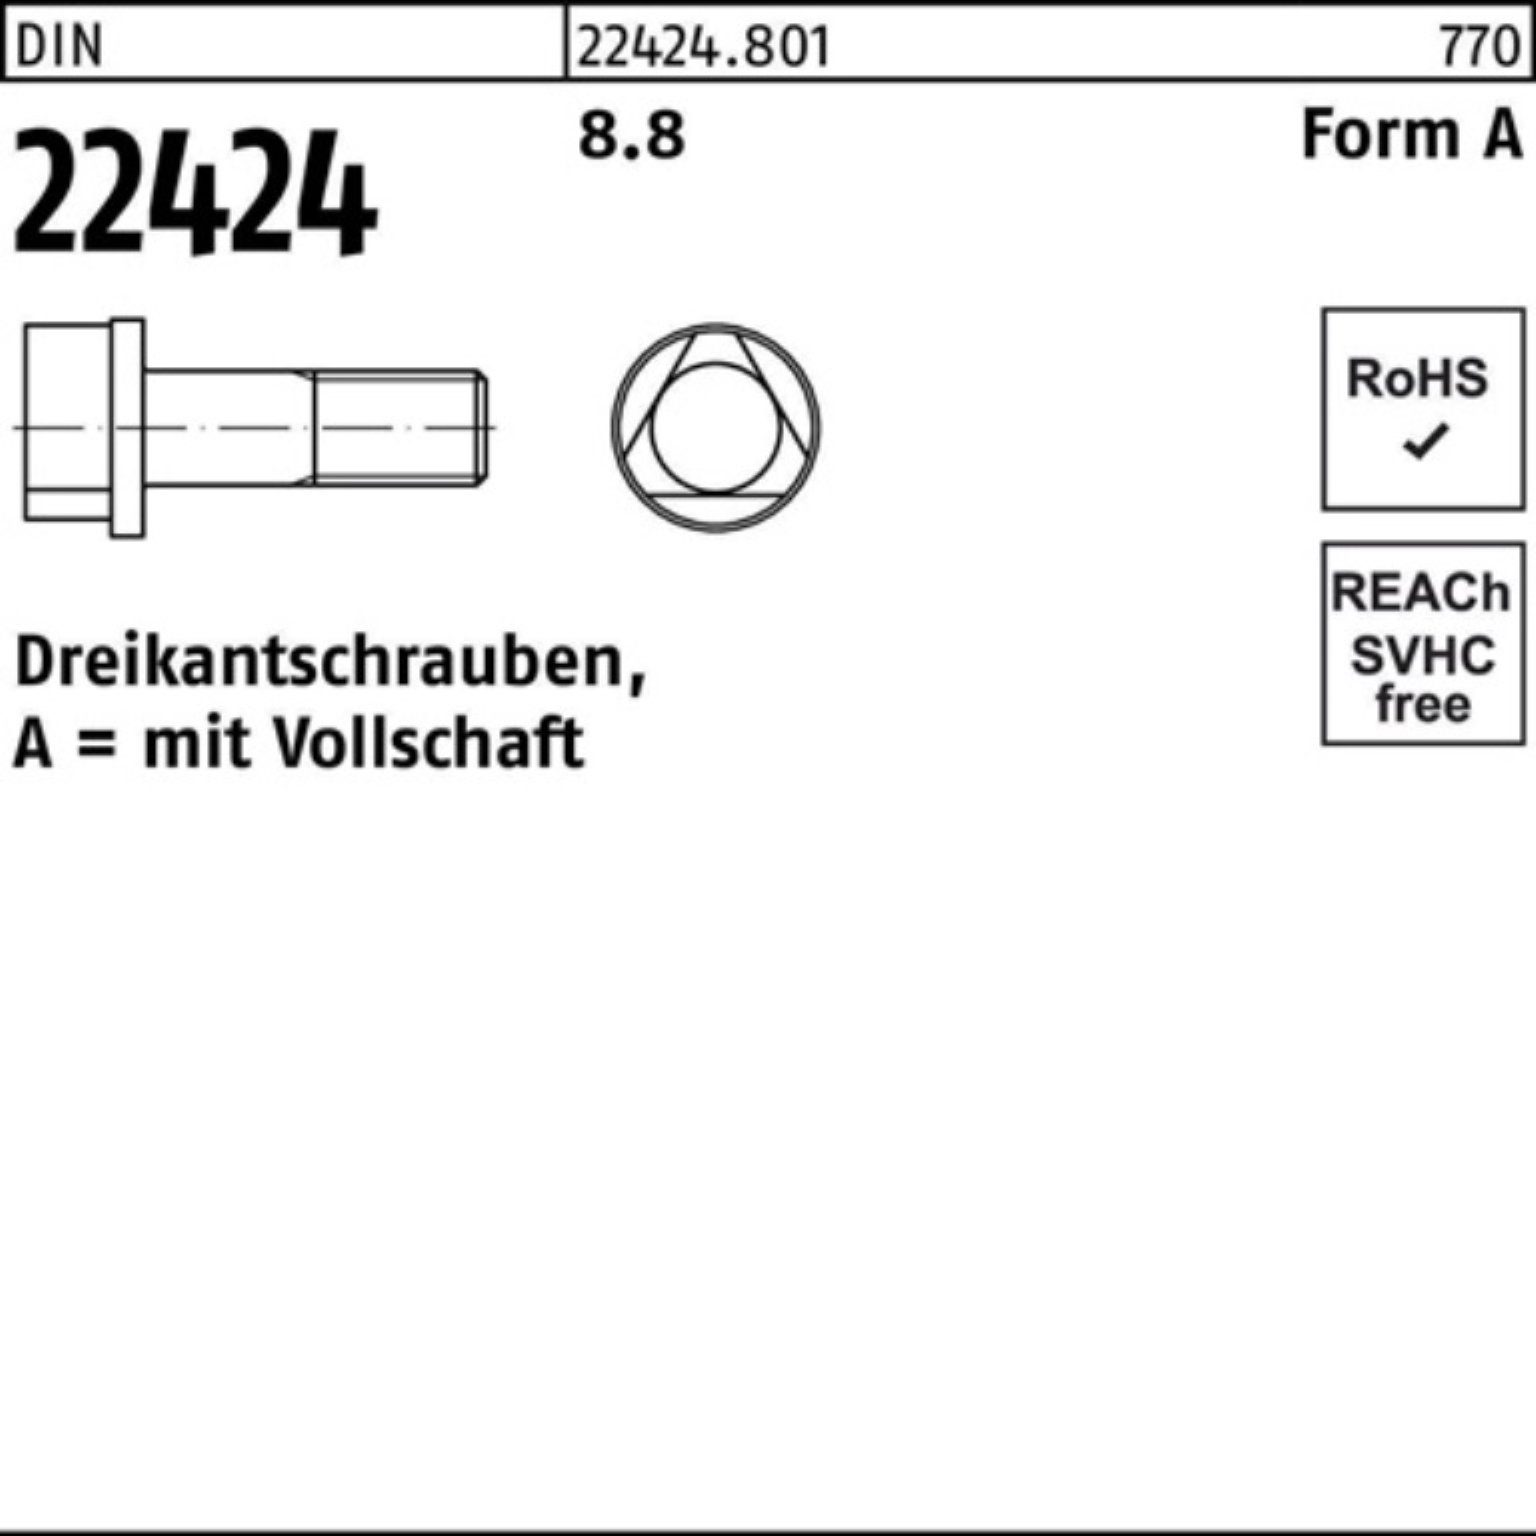 Pack 100 D 22424 30 Schraube Reyher 100er 10x DIN Dreikantschraube 8.8 Stück FormA AM